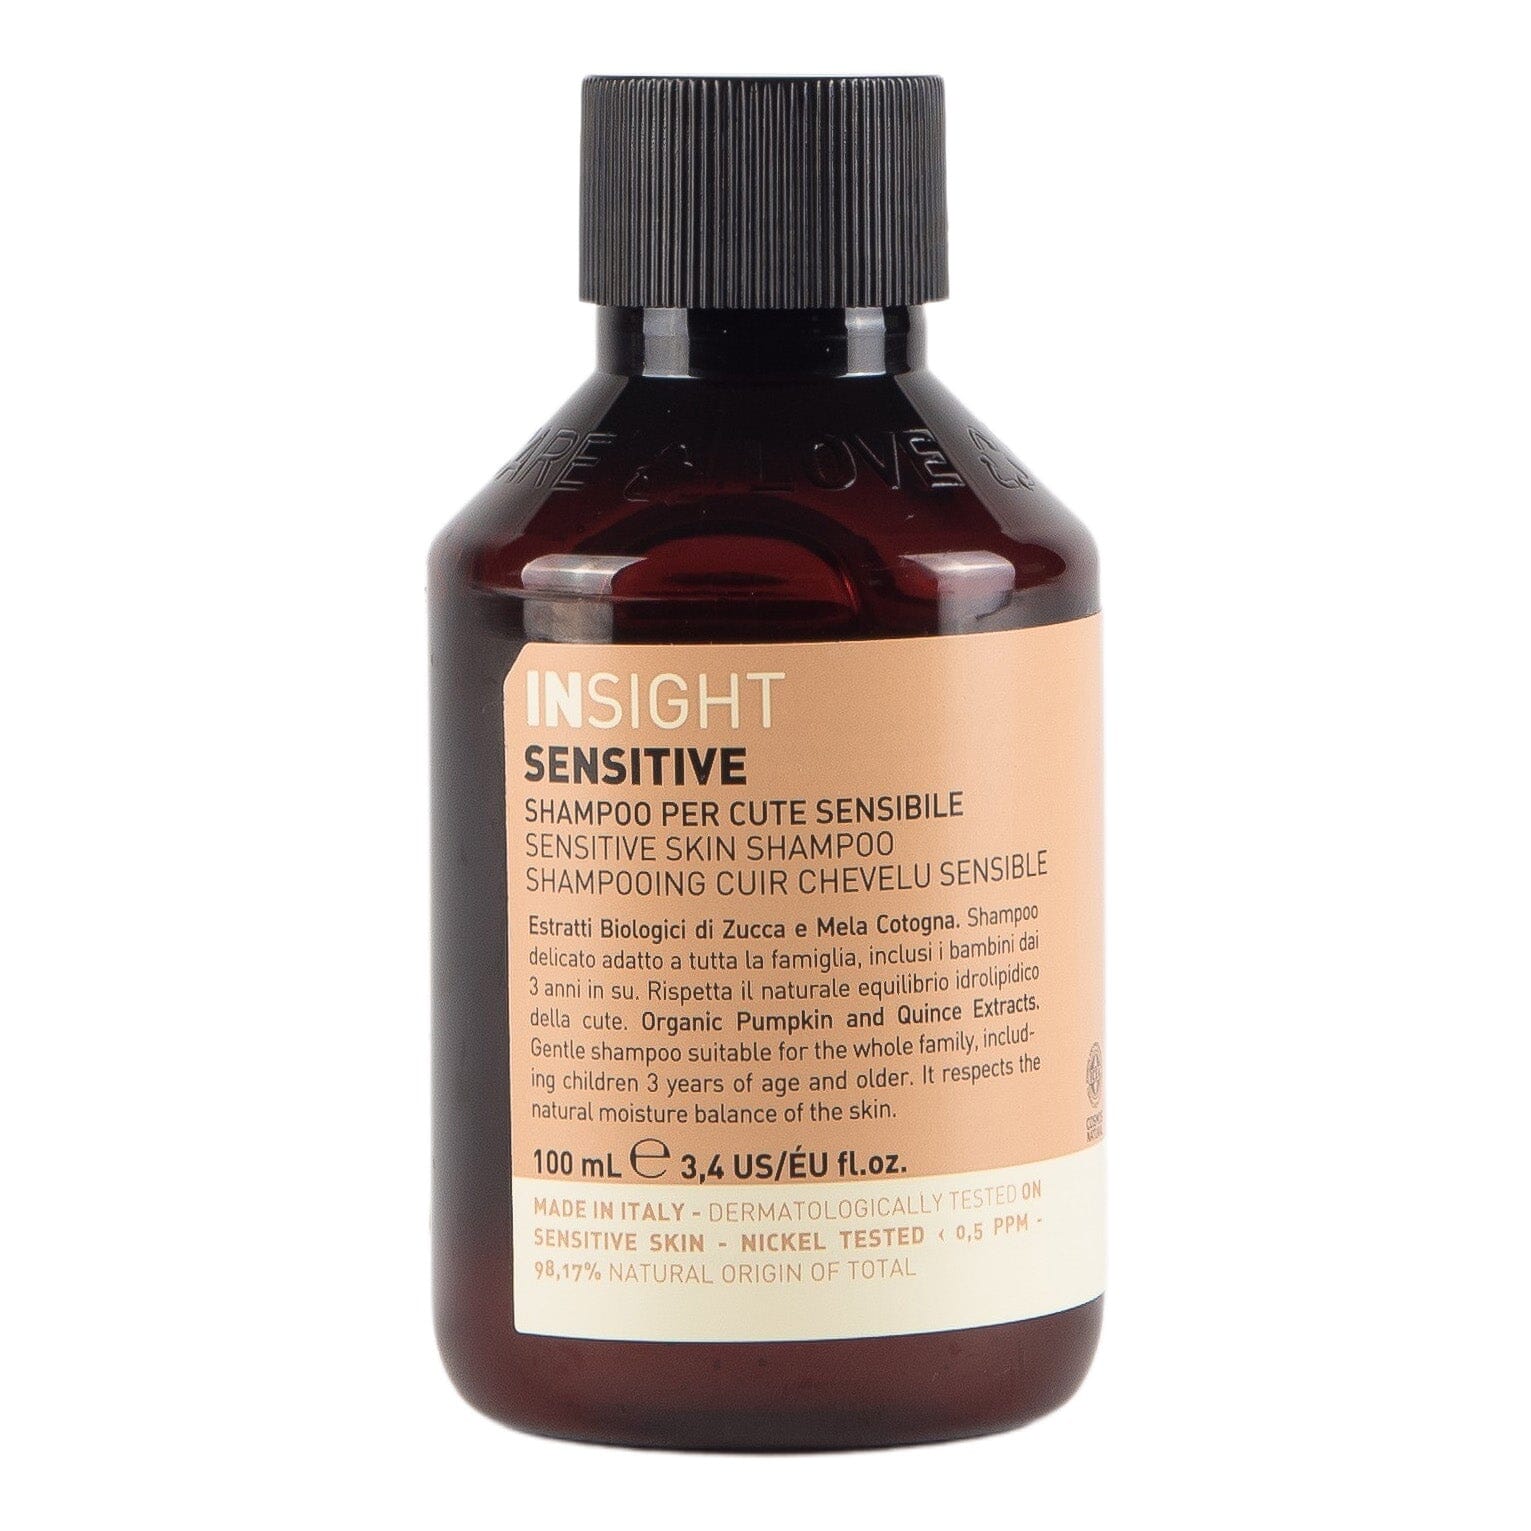 Insight Sensitive - Sensitive Skin sjampo 100 ml